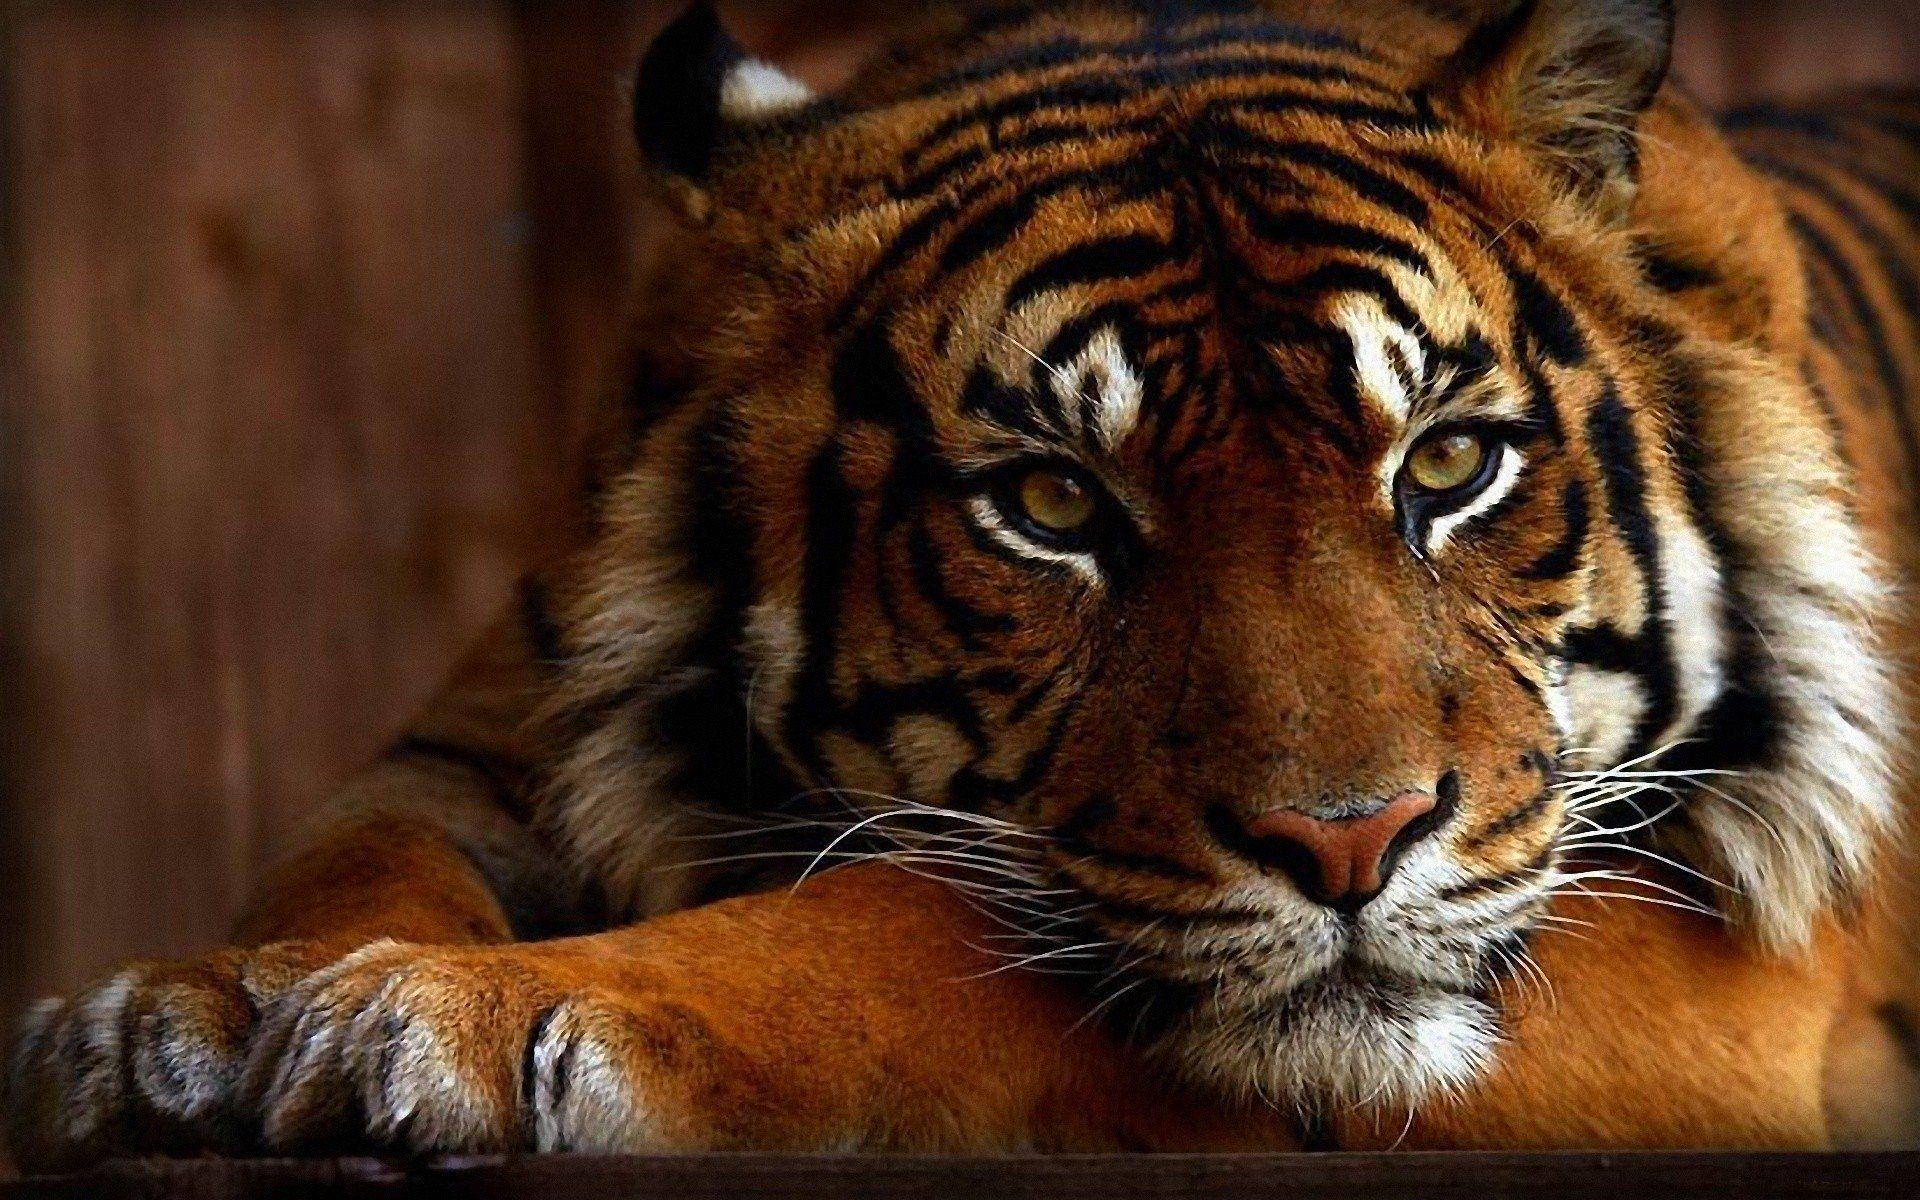 Free Tiger Wallpaper Downloads 500 Tiger Wallpapers for FREE   Wallpaperscom